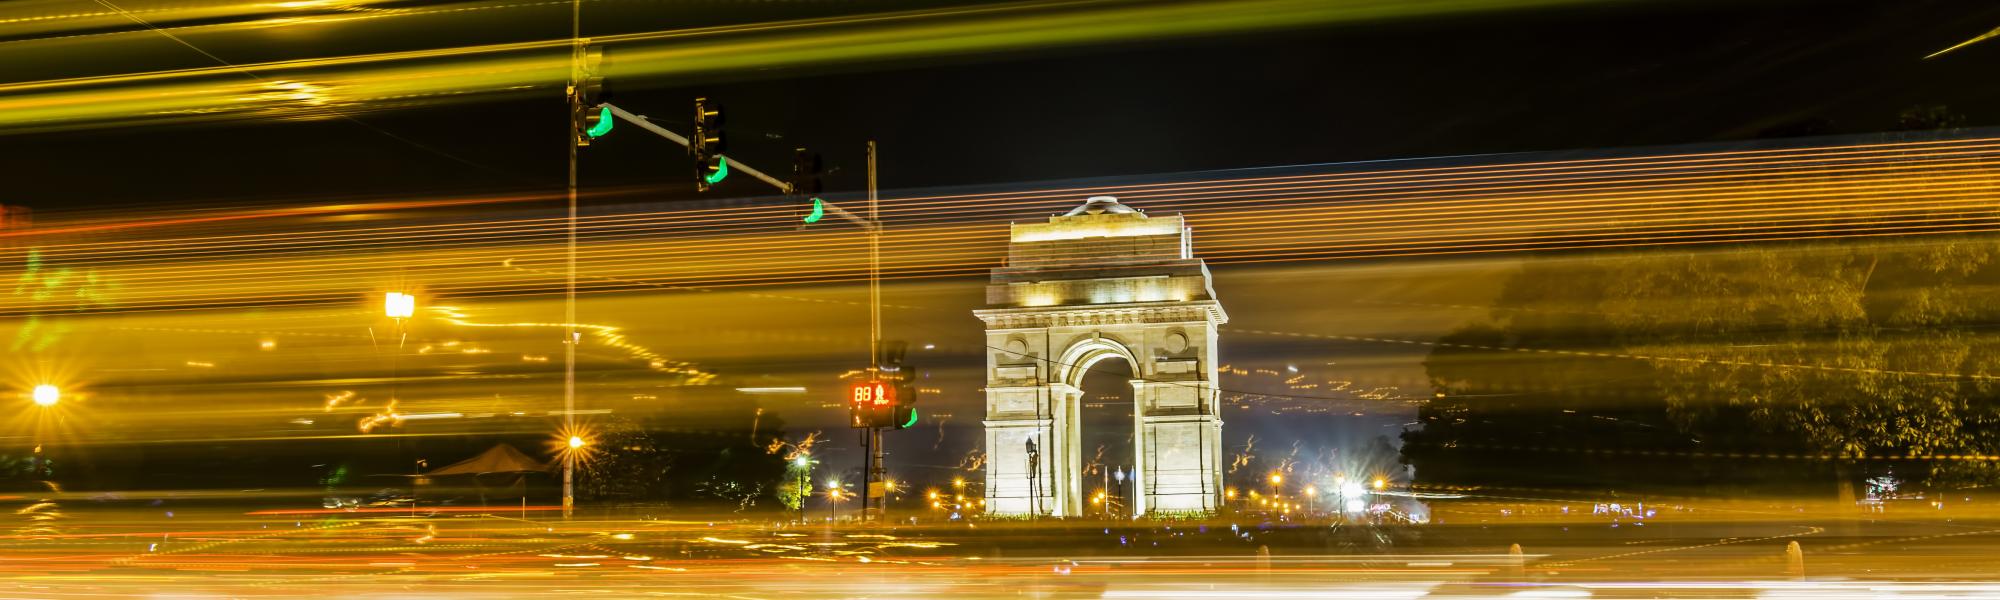 India Gate new Delhi at night